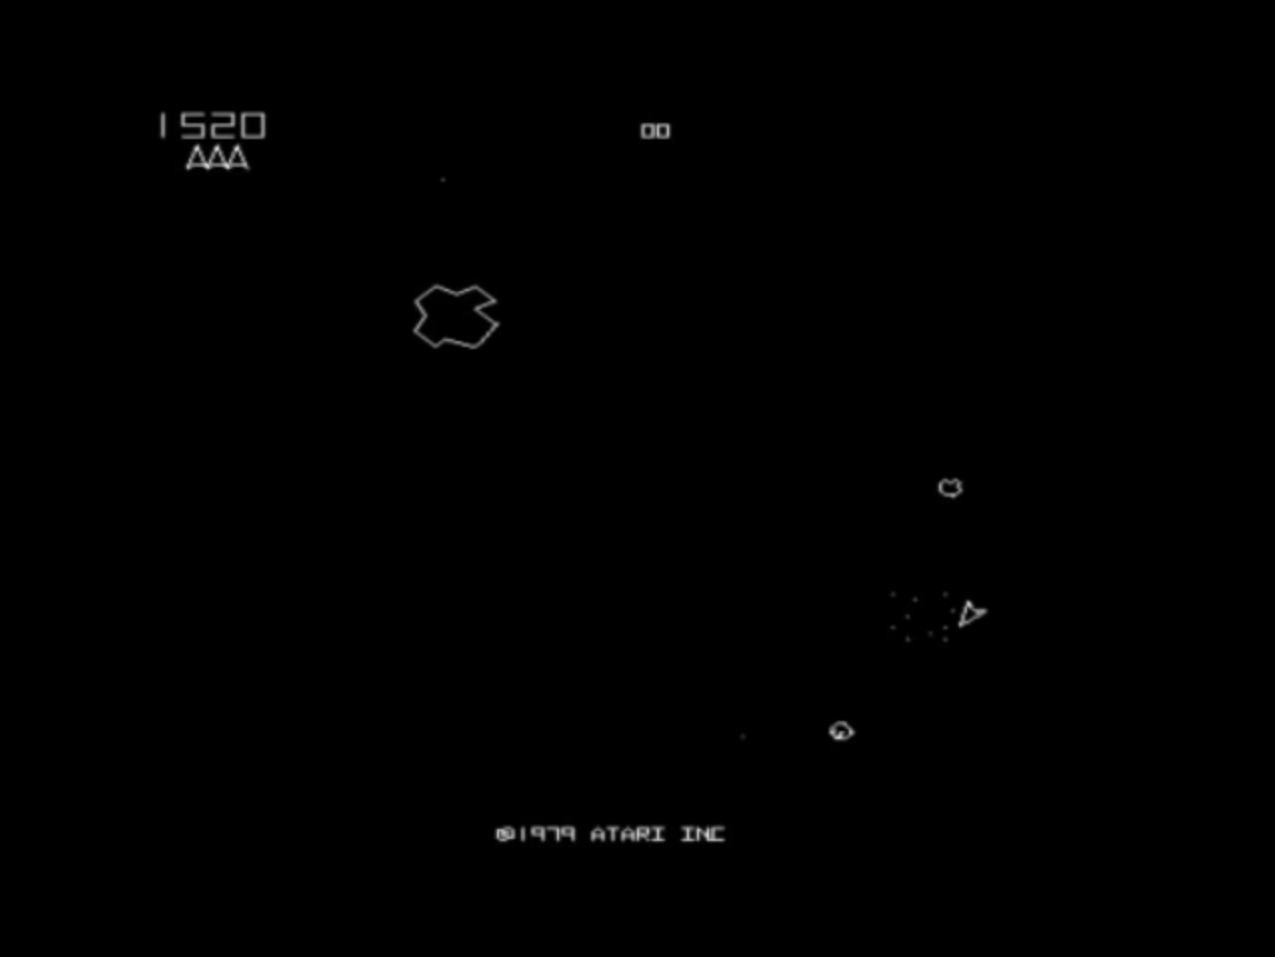 asteroids game gif